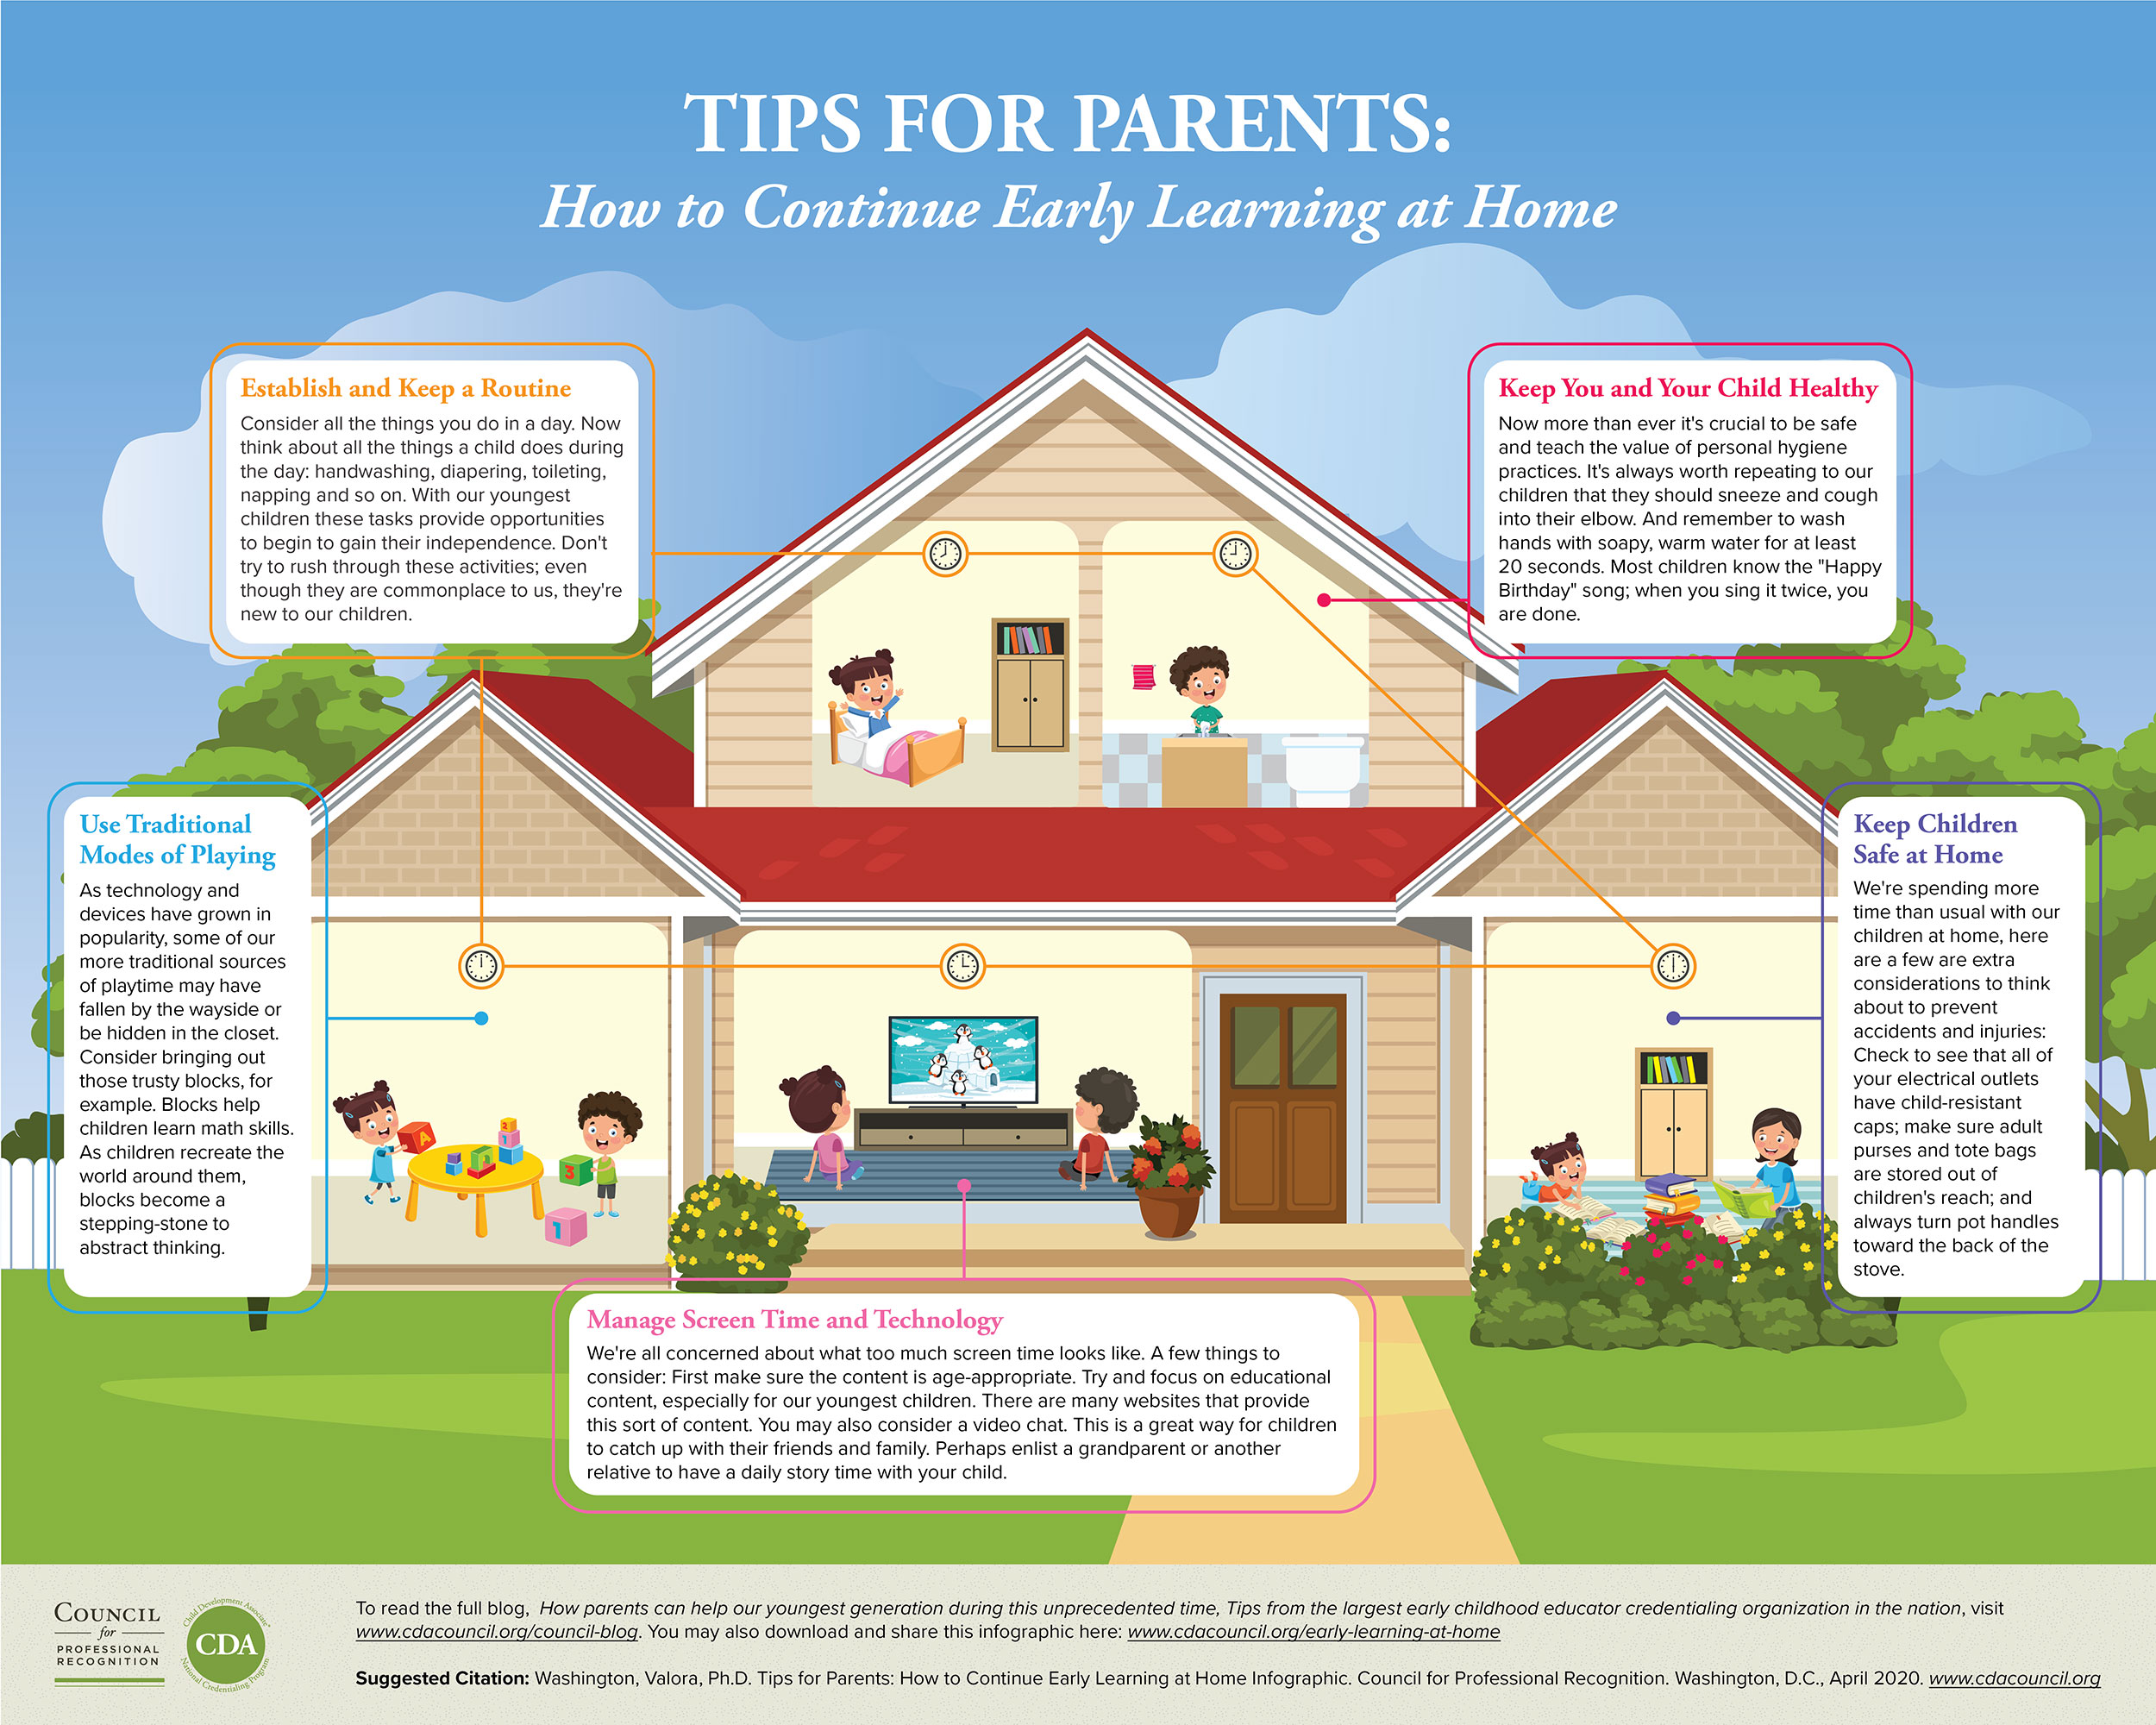 https://www.cdacouncil.org/wp-content/uploads/2020/08/Tips_for_Parents_Blog_Infographic_final.jpg